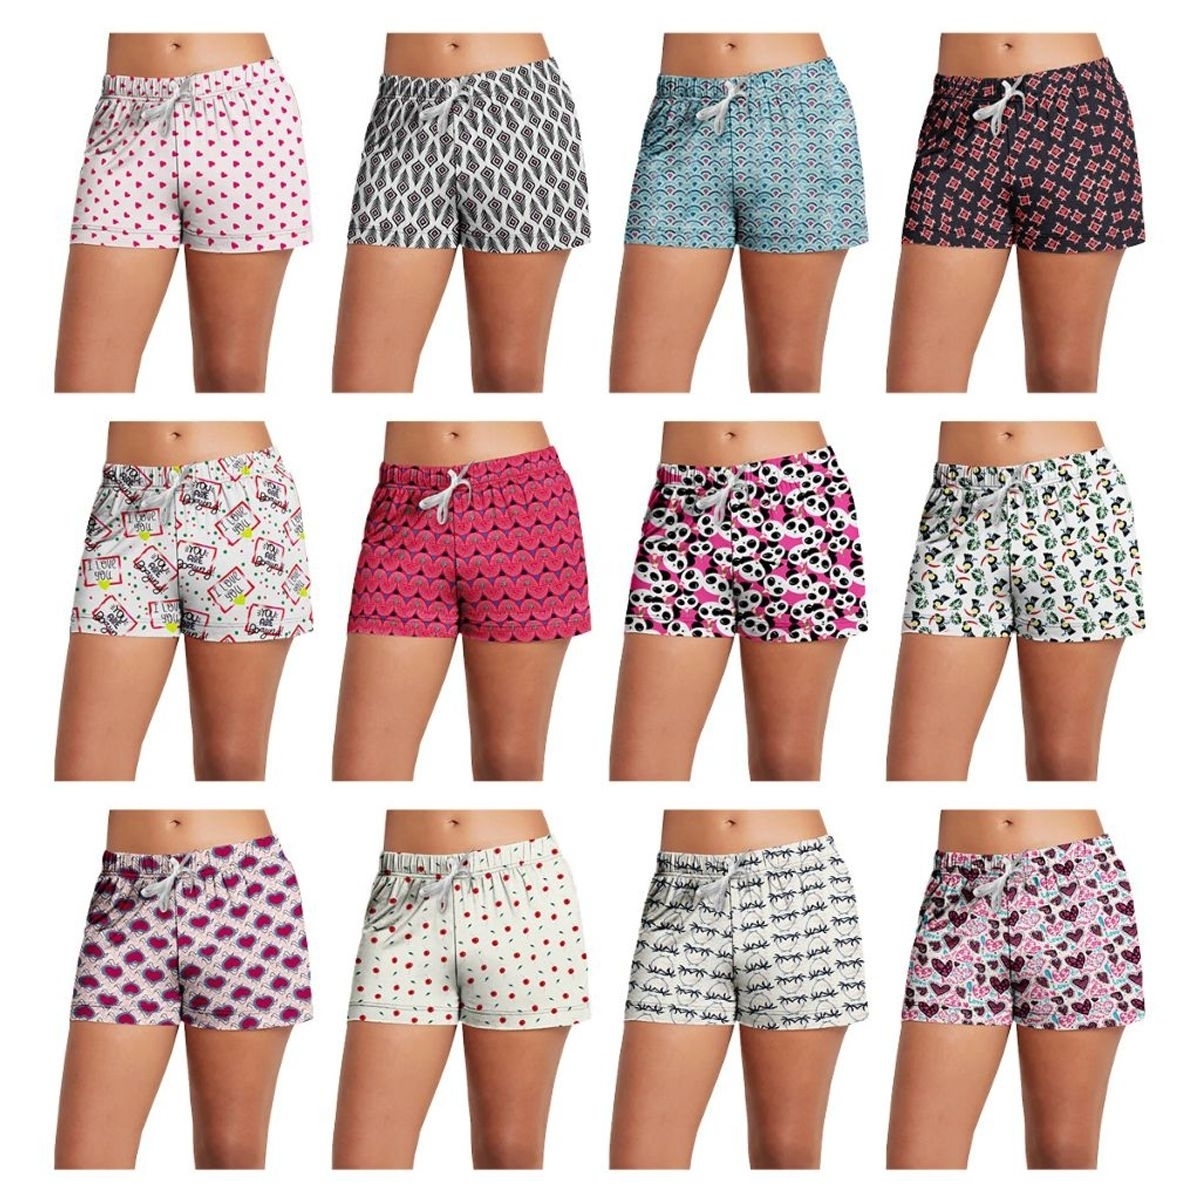 Multi-Pack: Women's Super-Soft Lightweight Fun Printed Comfy Lounge Bottom Pajama Shorts W/ Drawstring - 5-pack, Small, Love